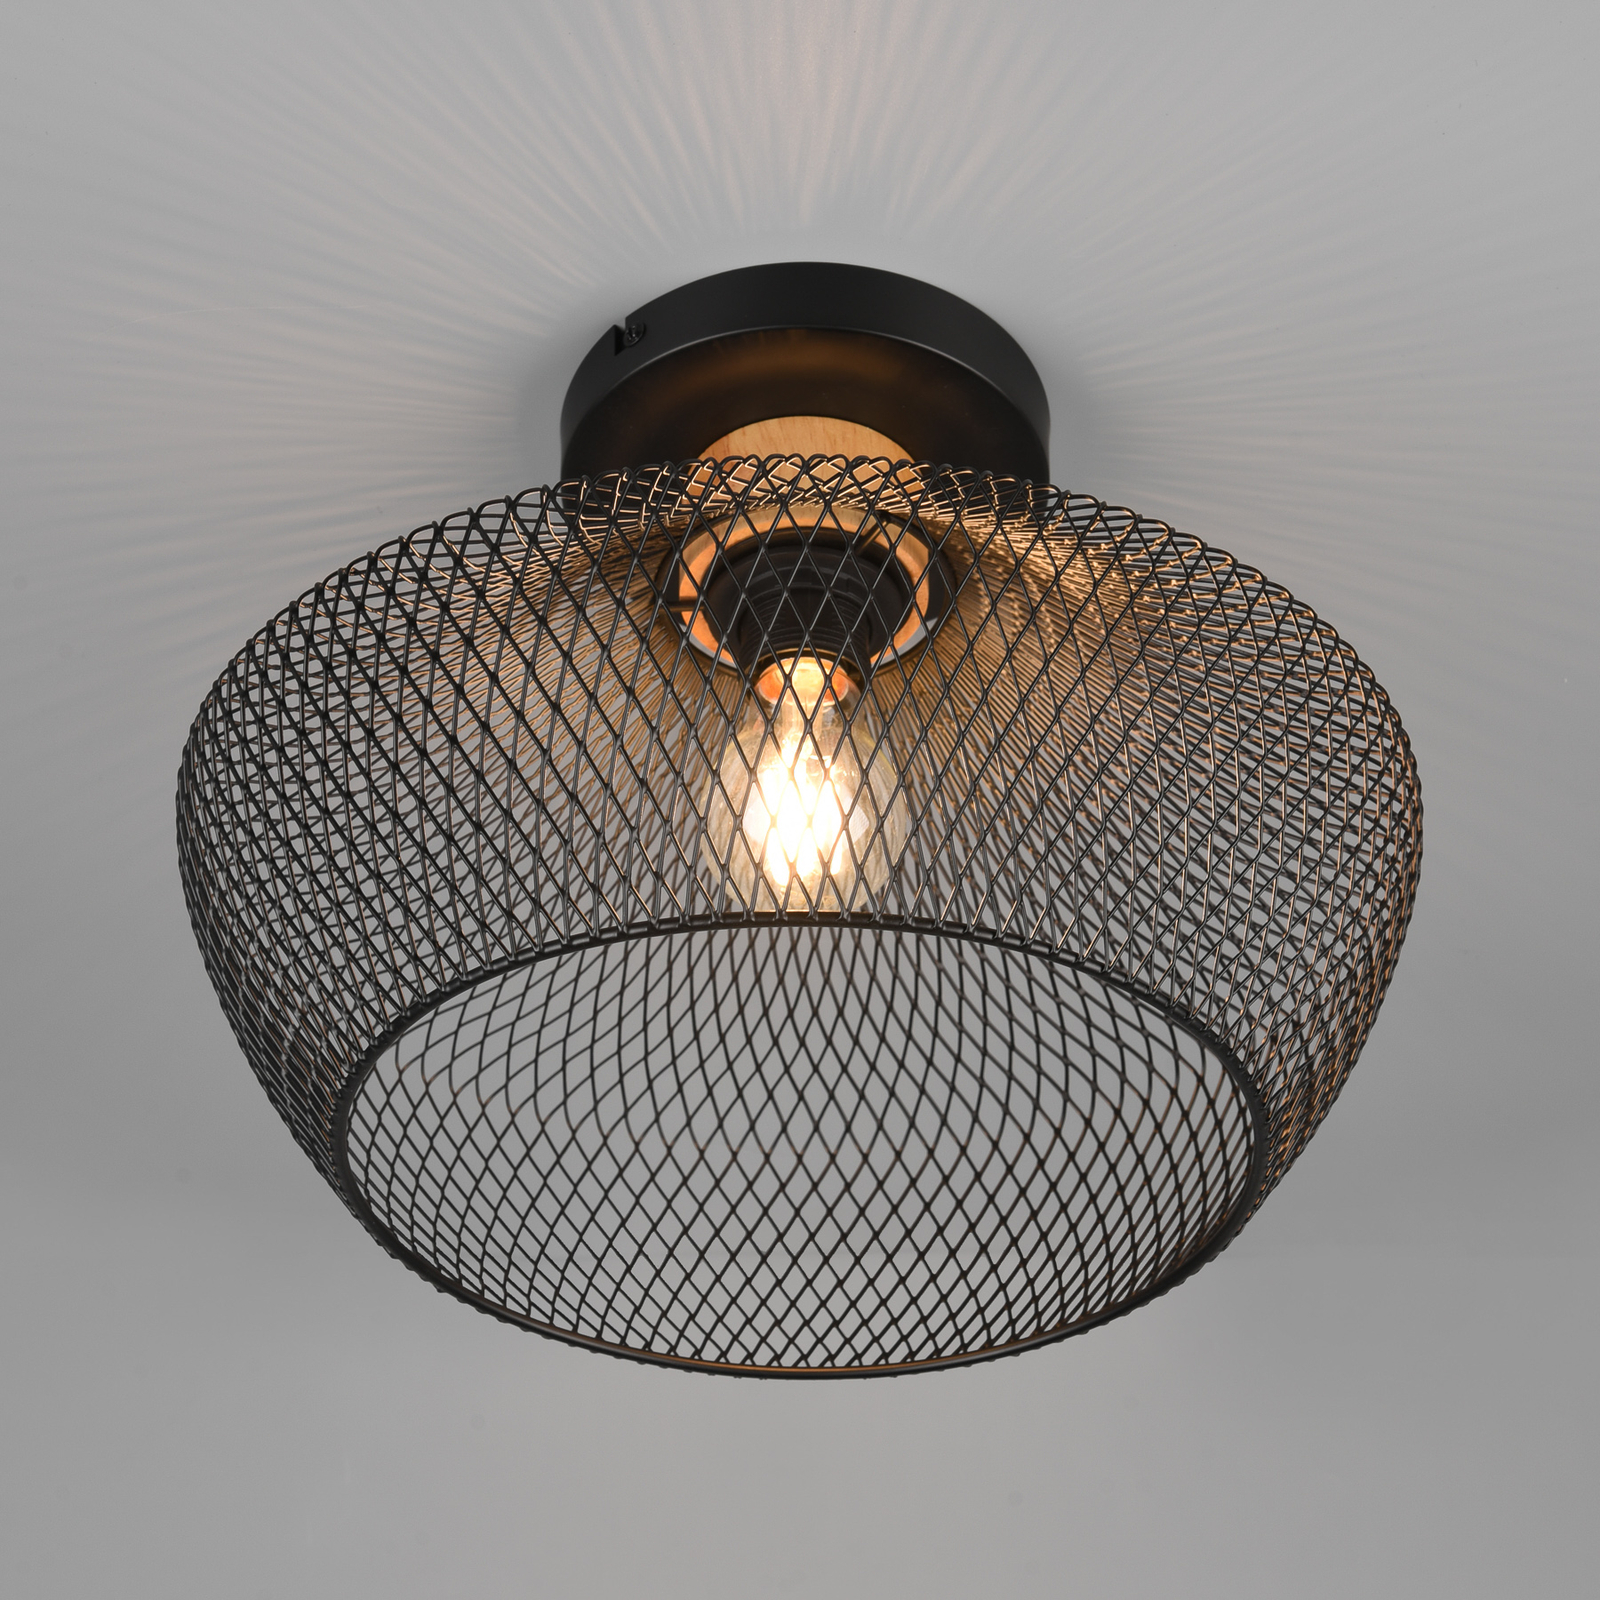 Valeria ceiling light with a latticed lampshade